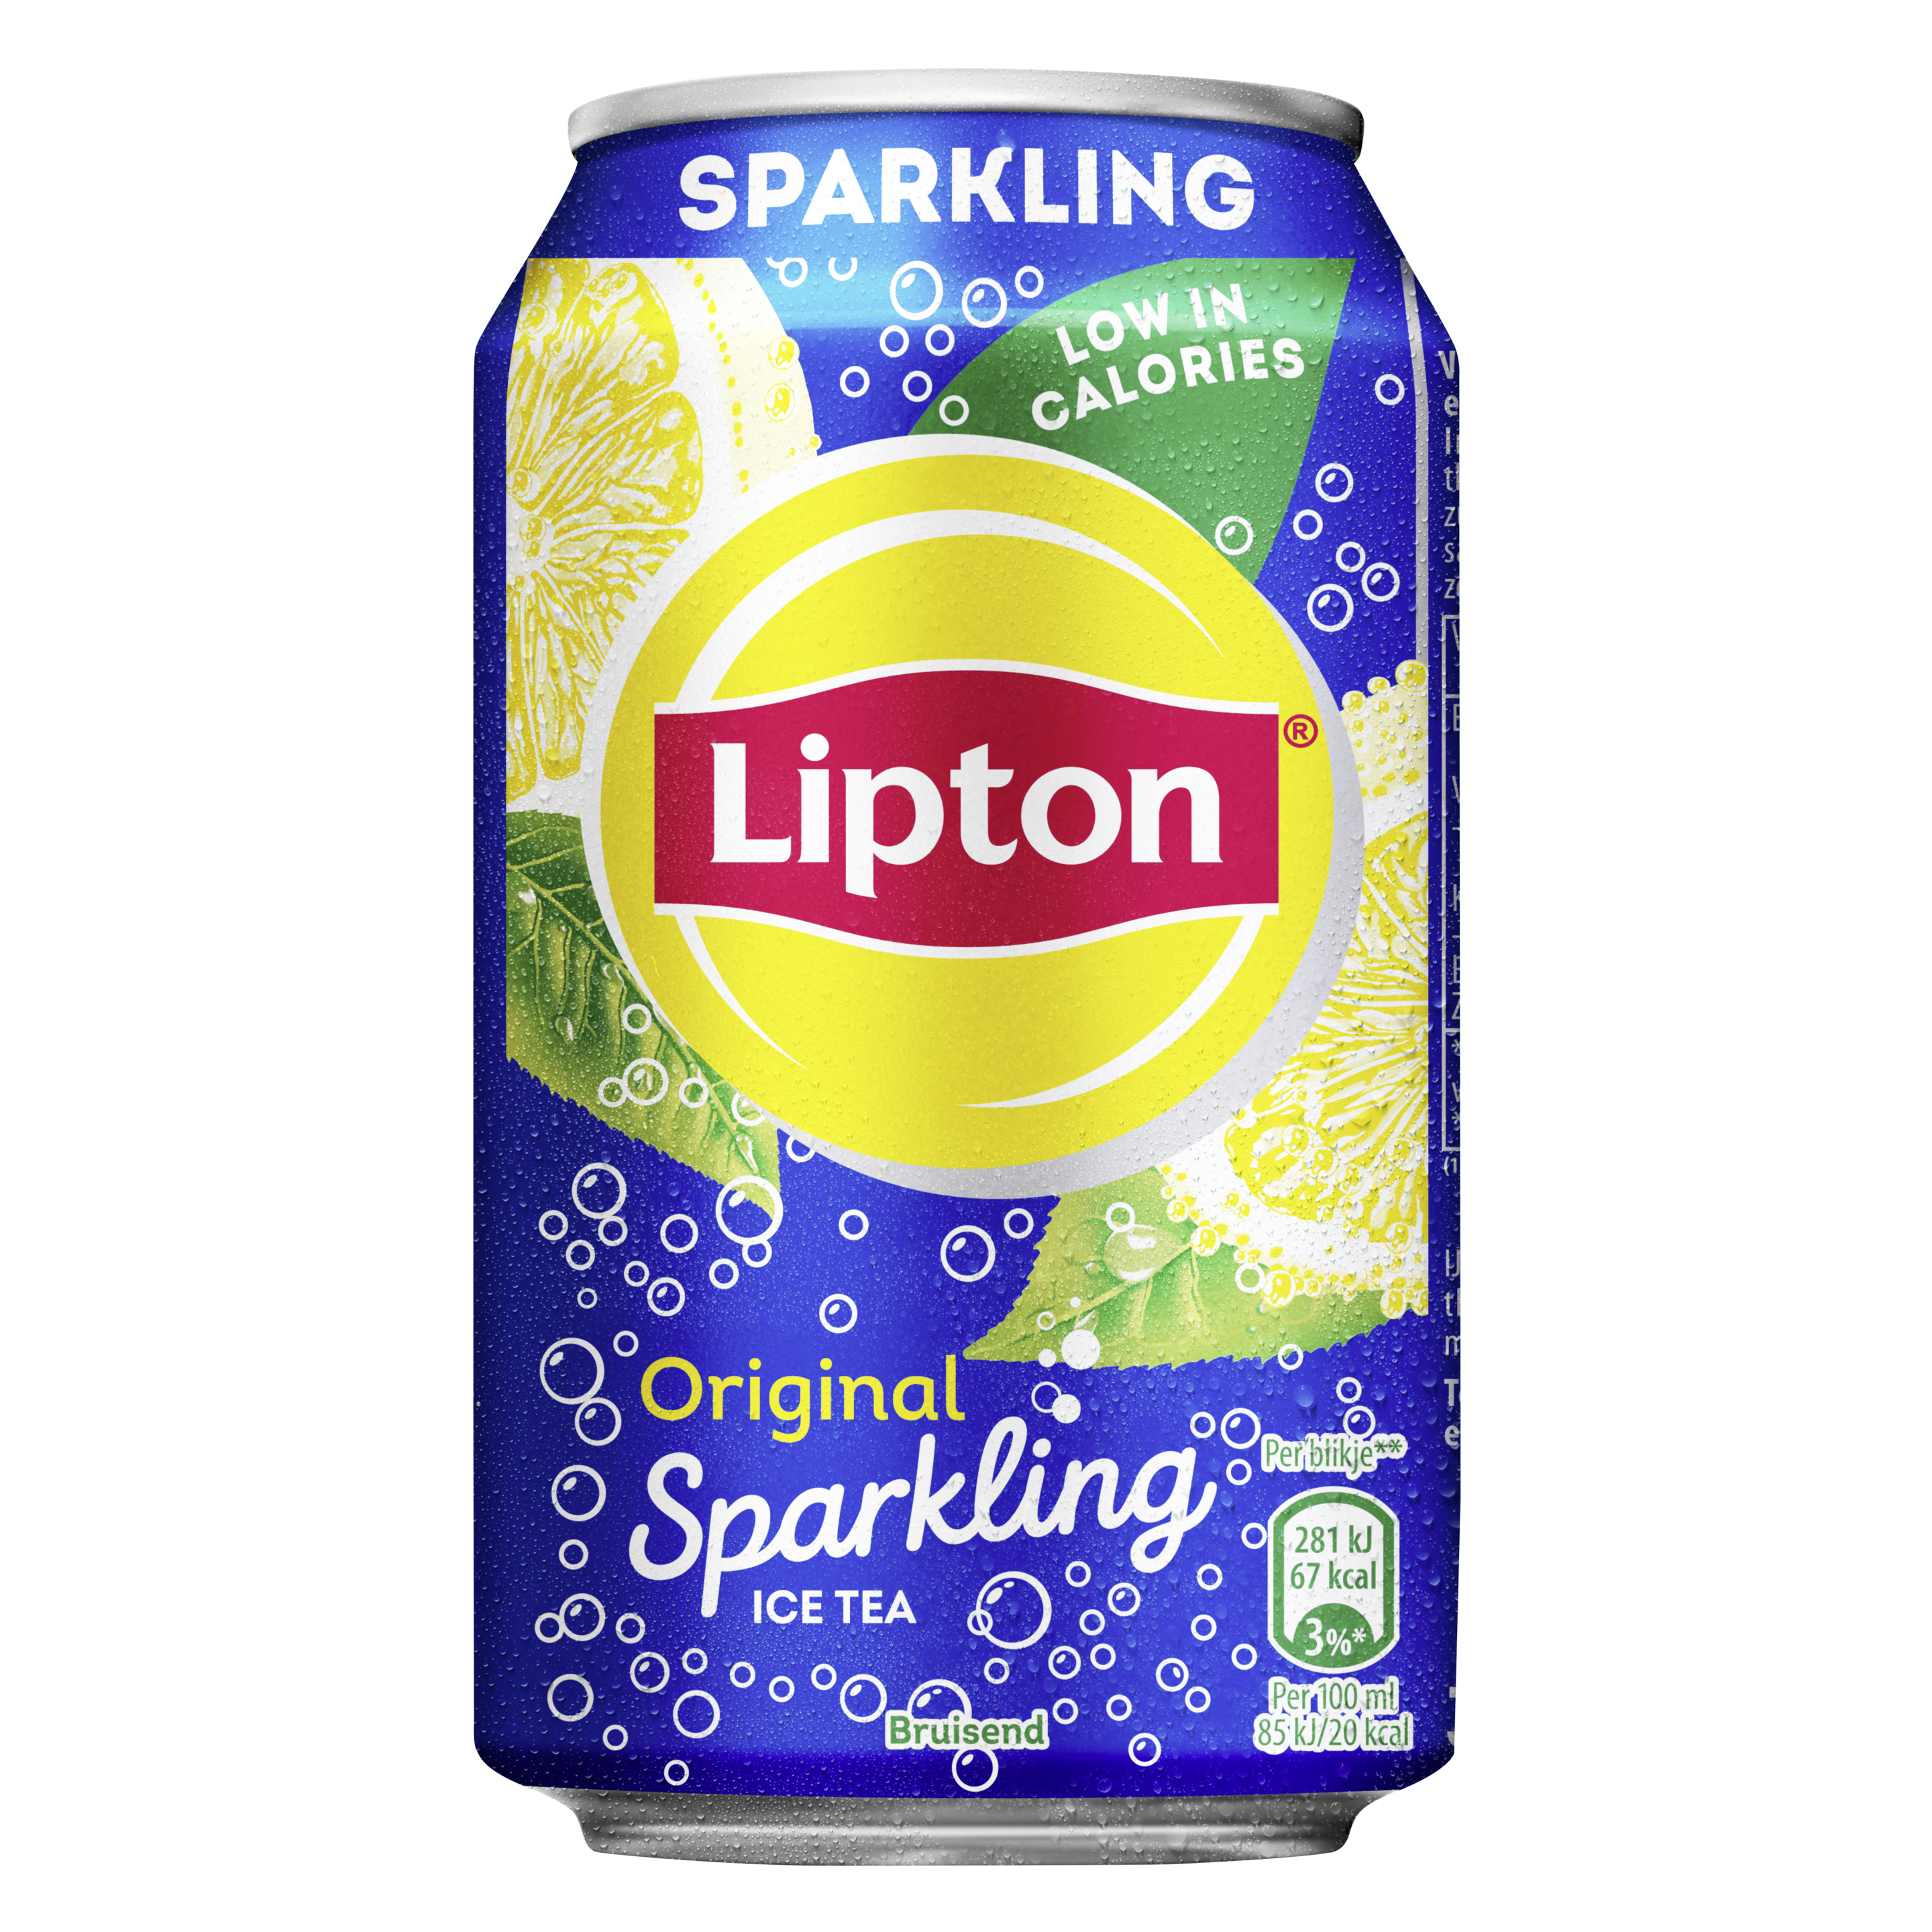 Lipton Ice Tea Sparkling 330ml